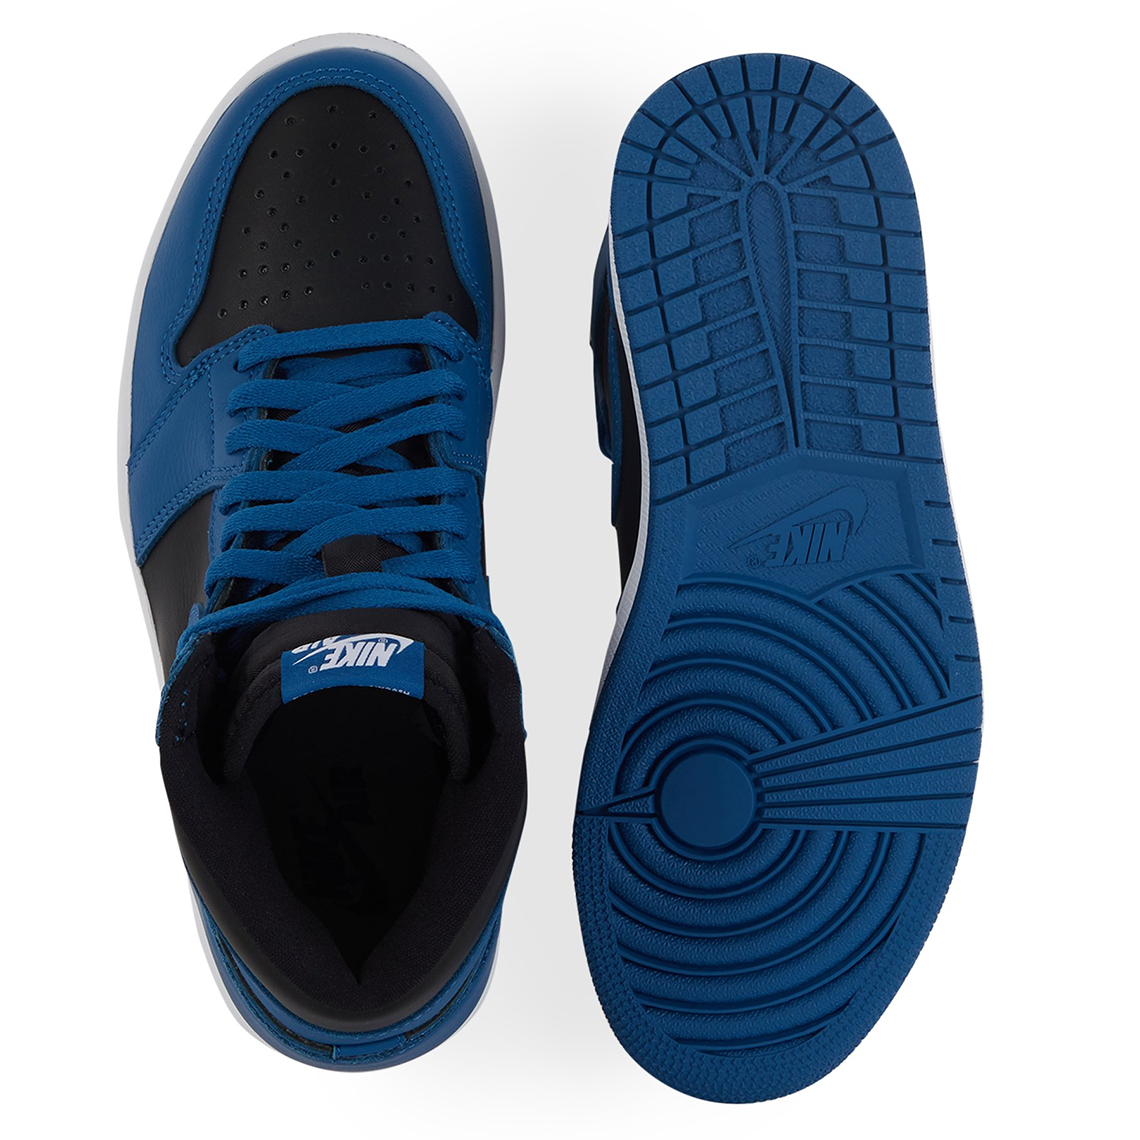 Nike Air Jordan 1 Retro High OG Dark Marina Blue Sneaker - 555088-404 in Blue, Men's at Urban Outfitters